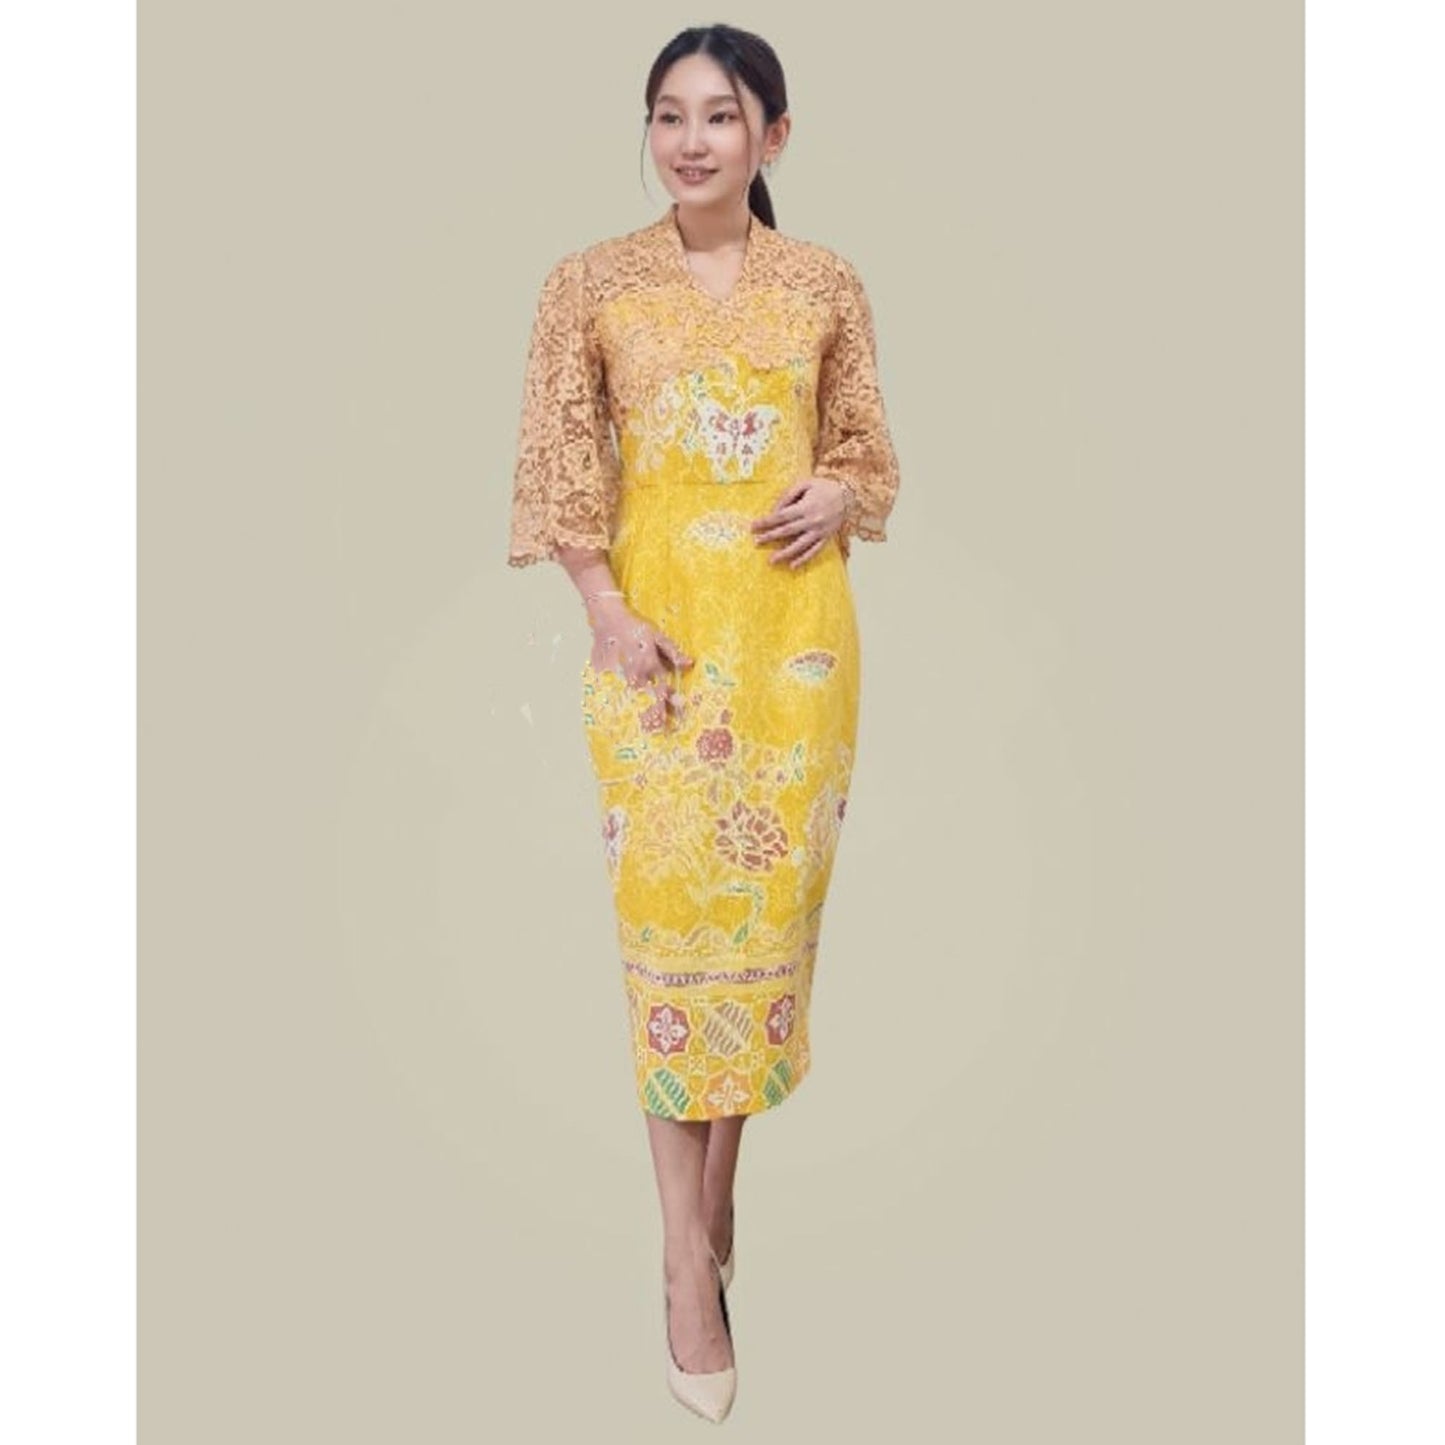 Cut Out Encim Yellow Dress Batik Modern Party Brukat Combination